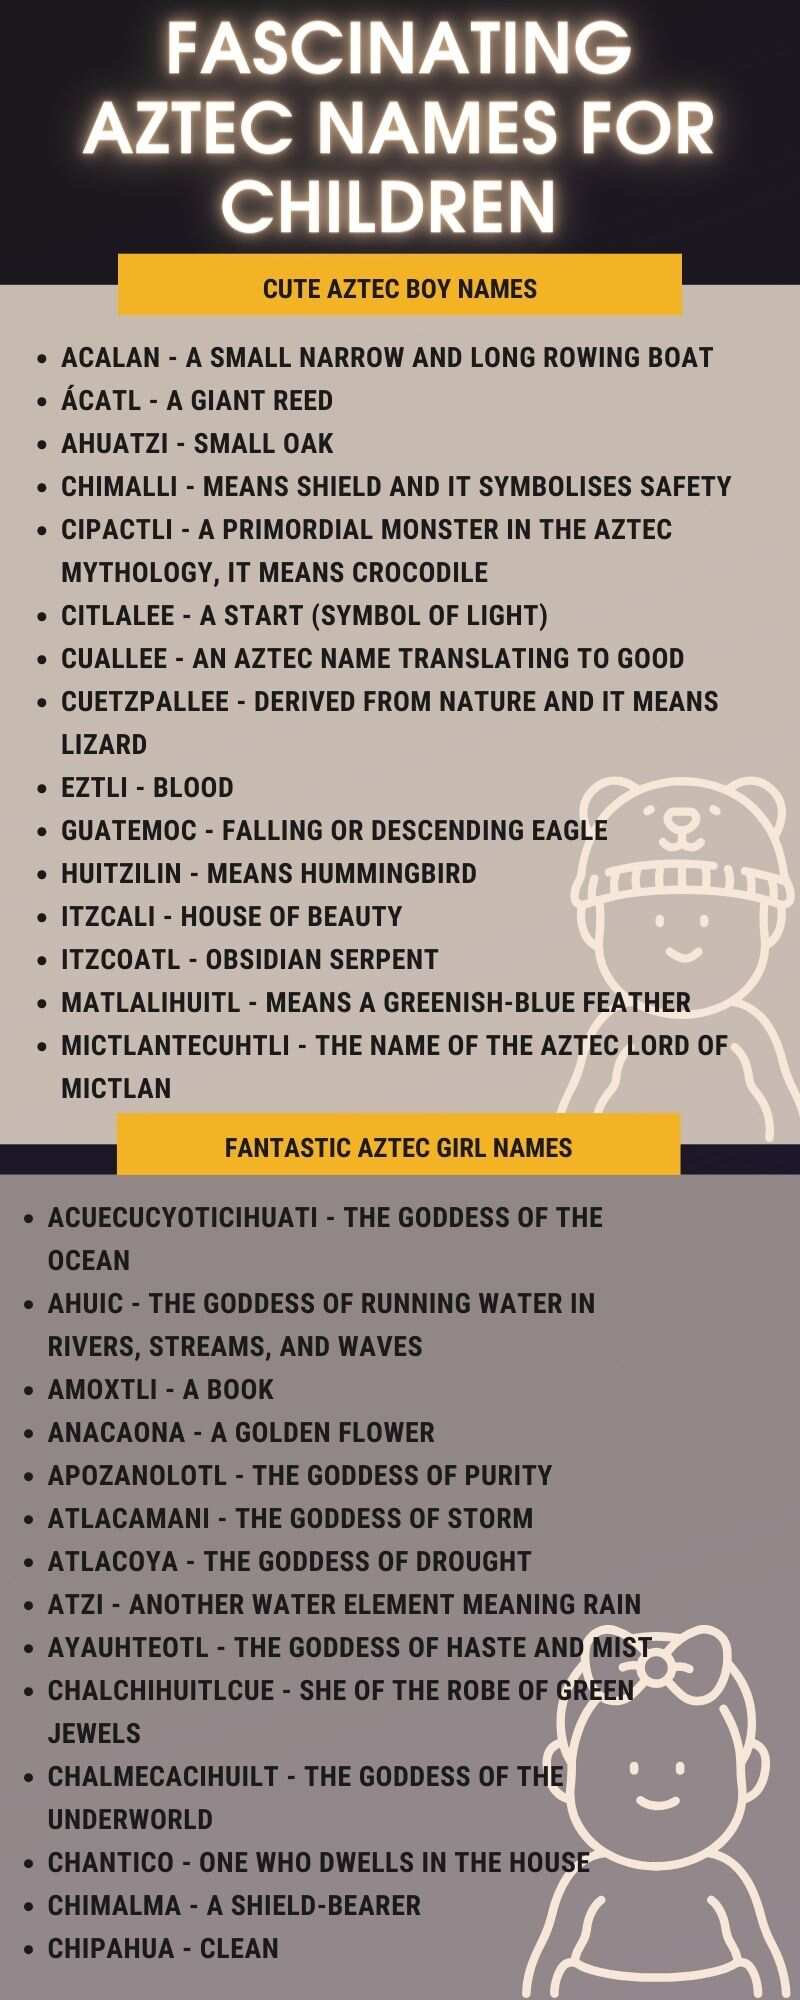 Fascinating Aztec names for children